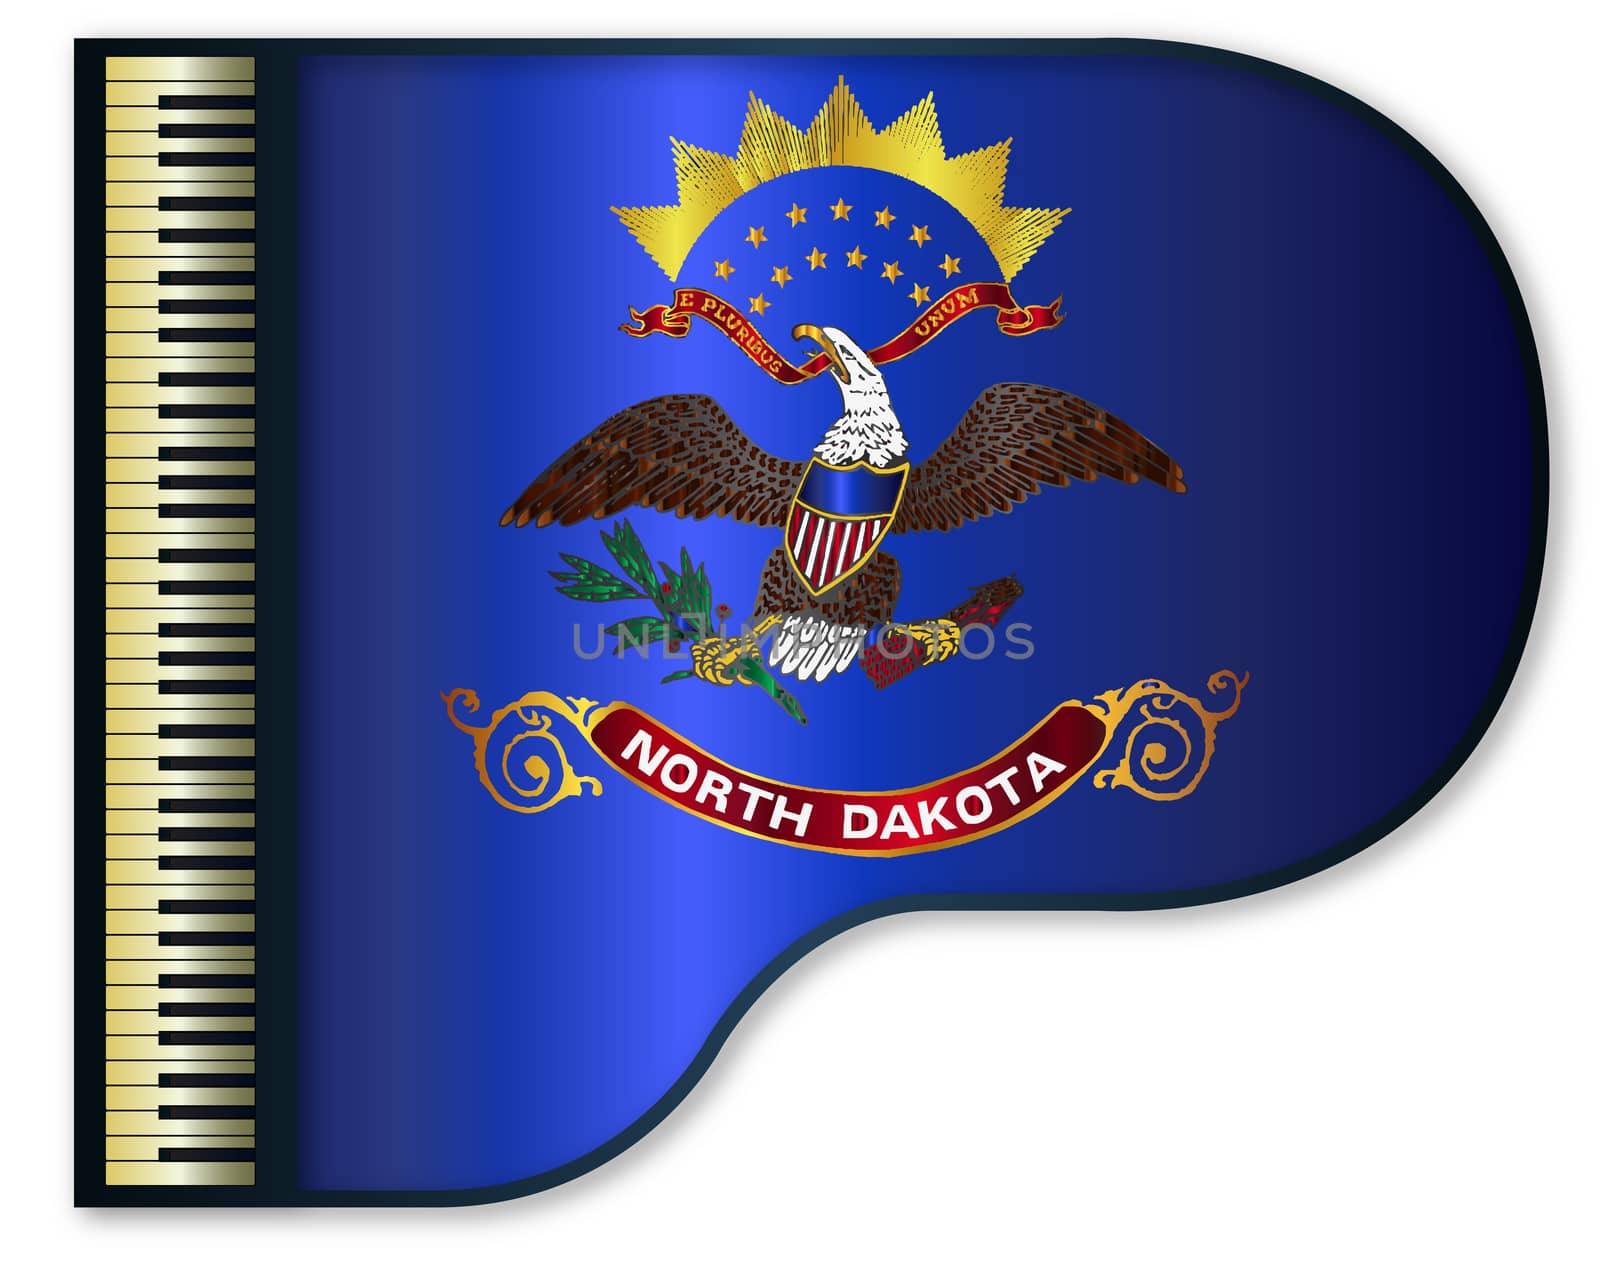 The North Dakota state flag set into a traditional black grand piano